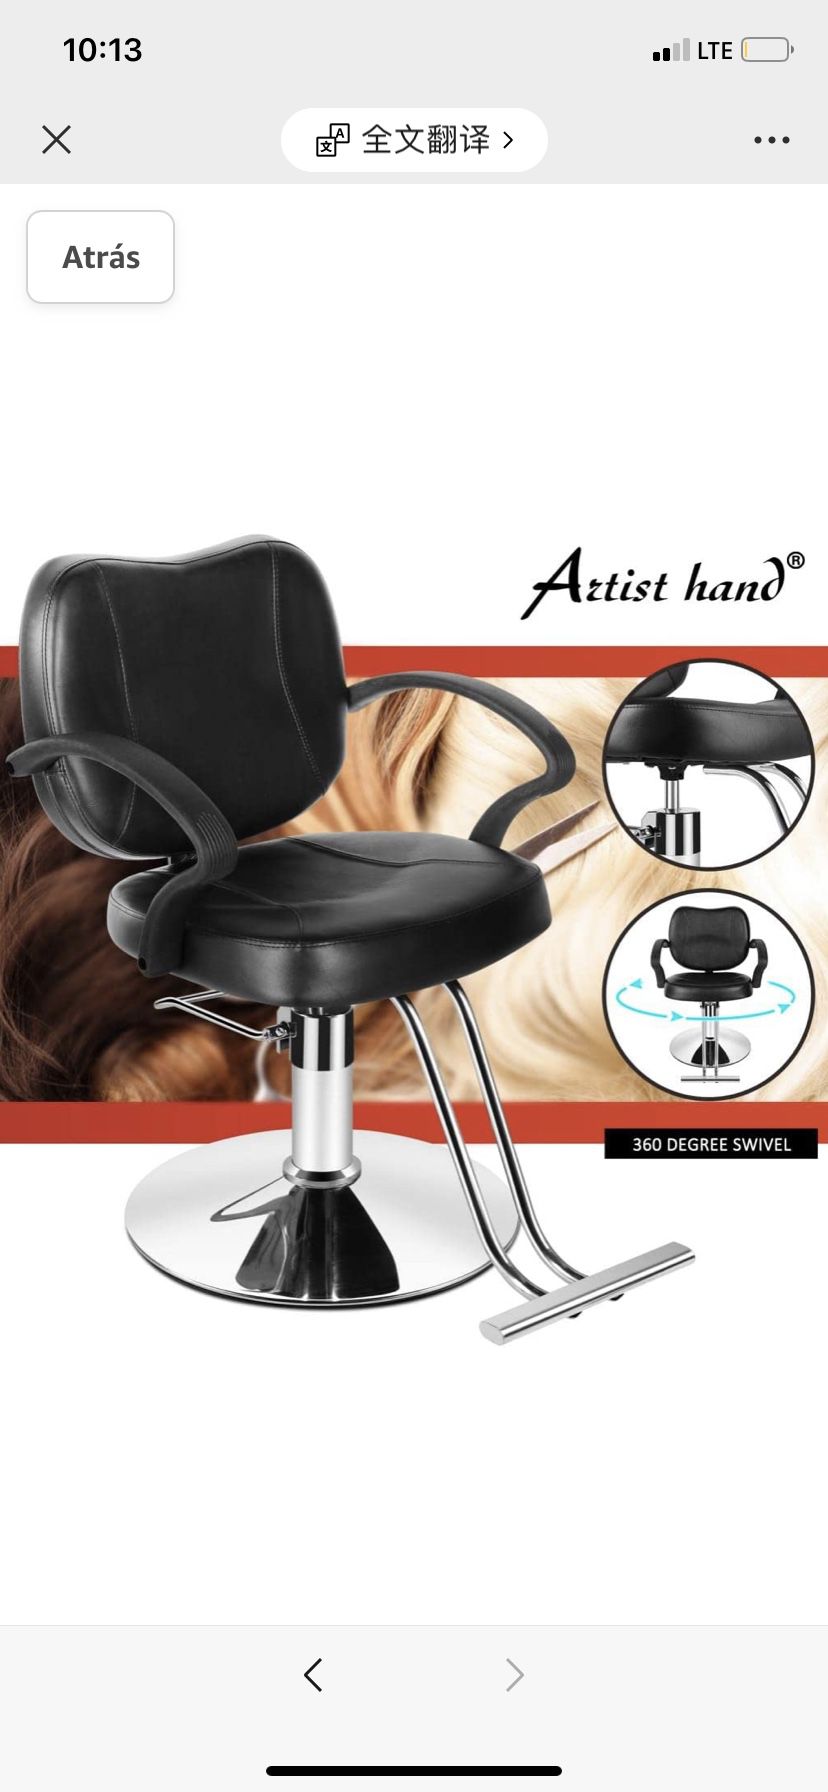 Hairdresser's hand-held hairdressing chair